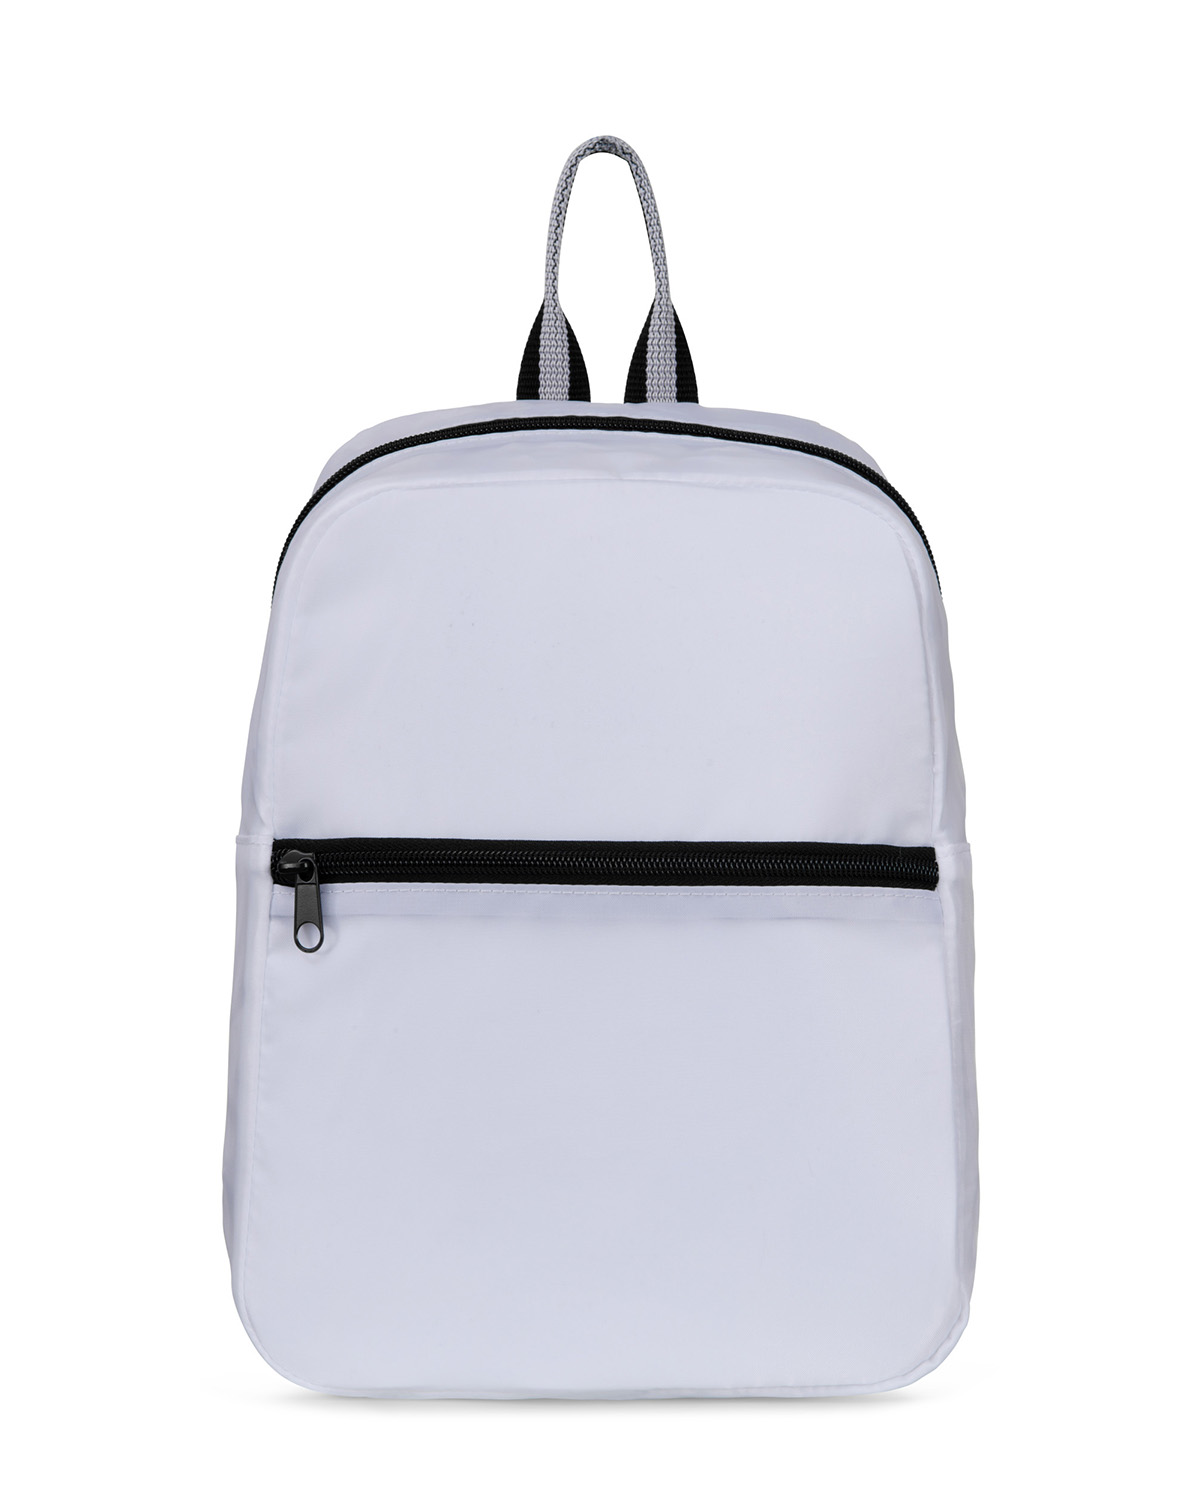 Gemline Moto Mini Backpack. 100066 - image 1 of 1